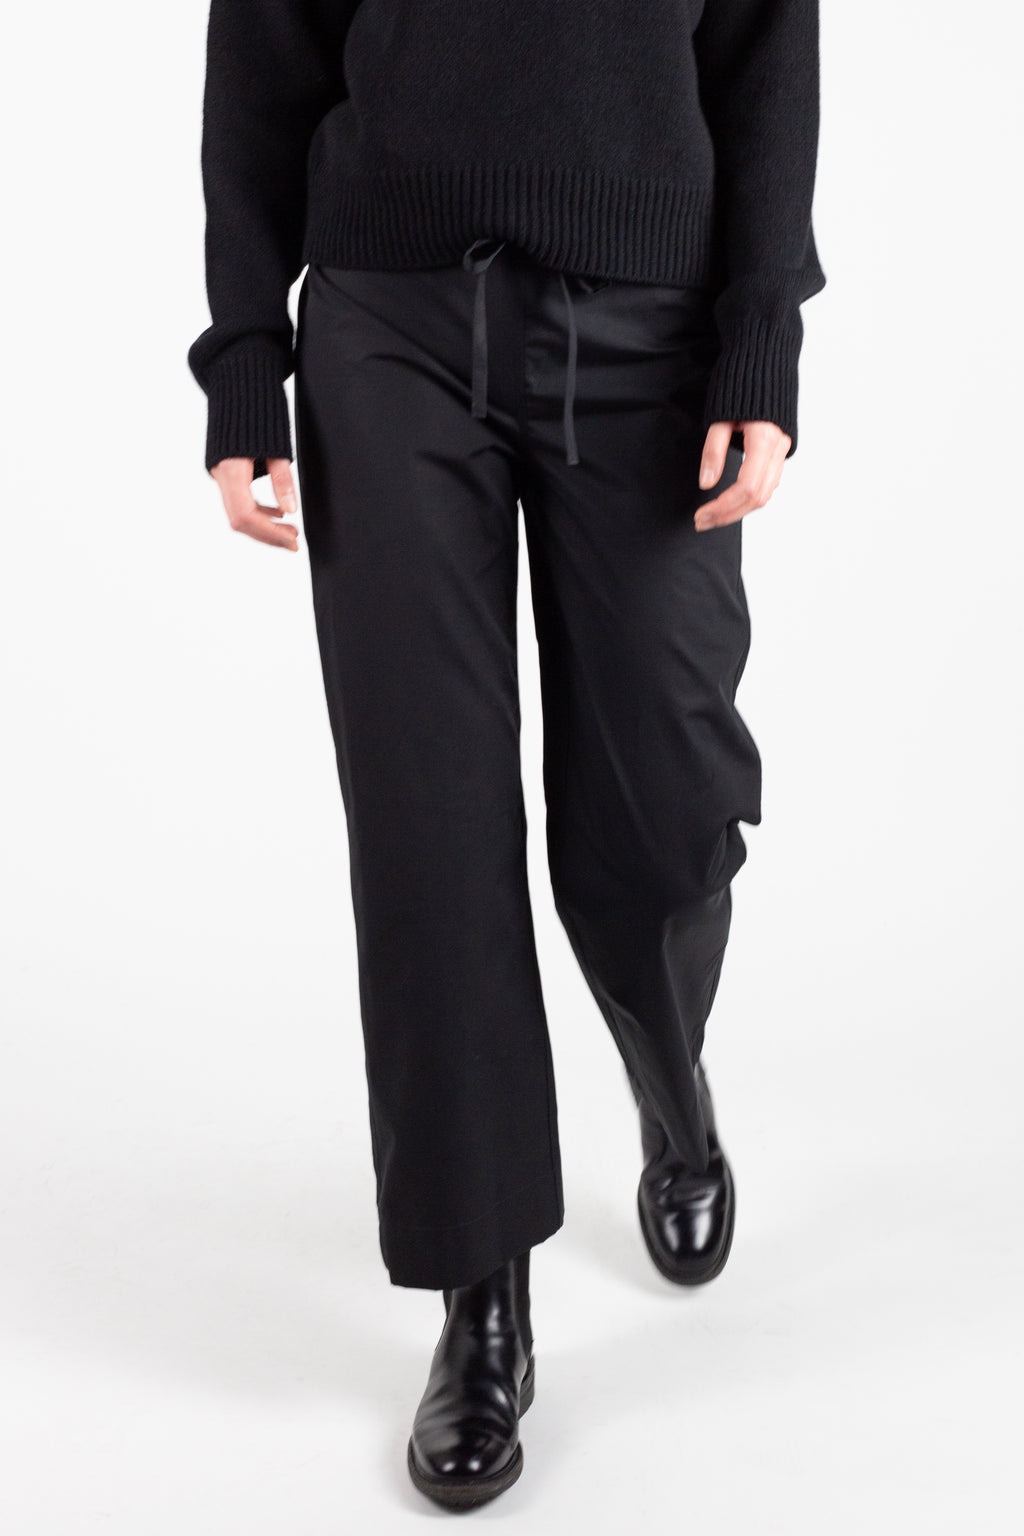 Black loose cotton trouser. 100% Cotton poplin. Drawstring waist 